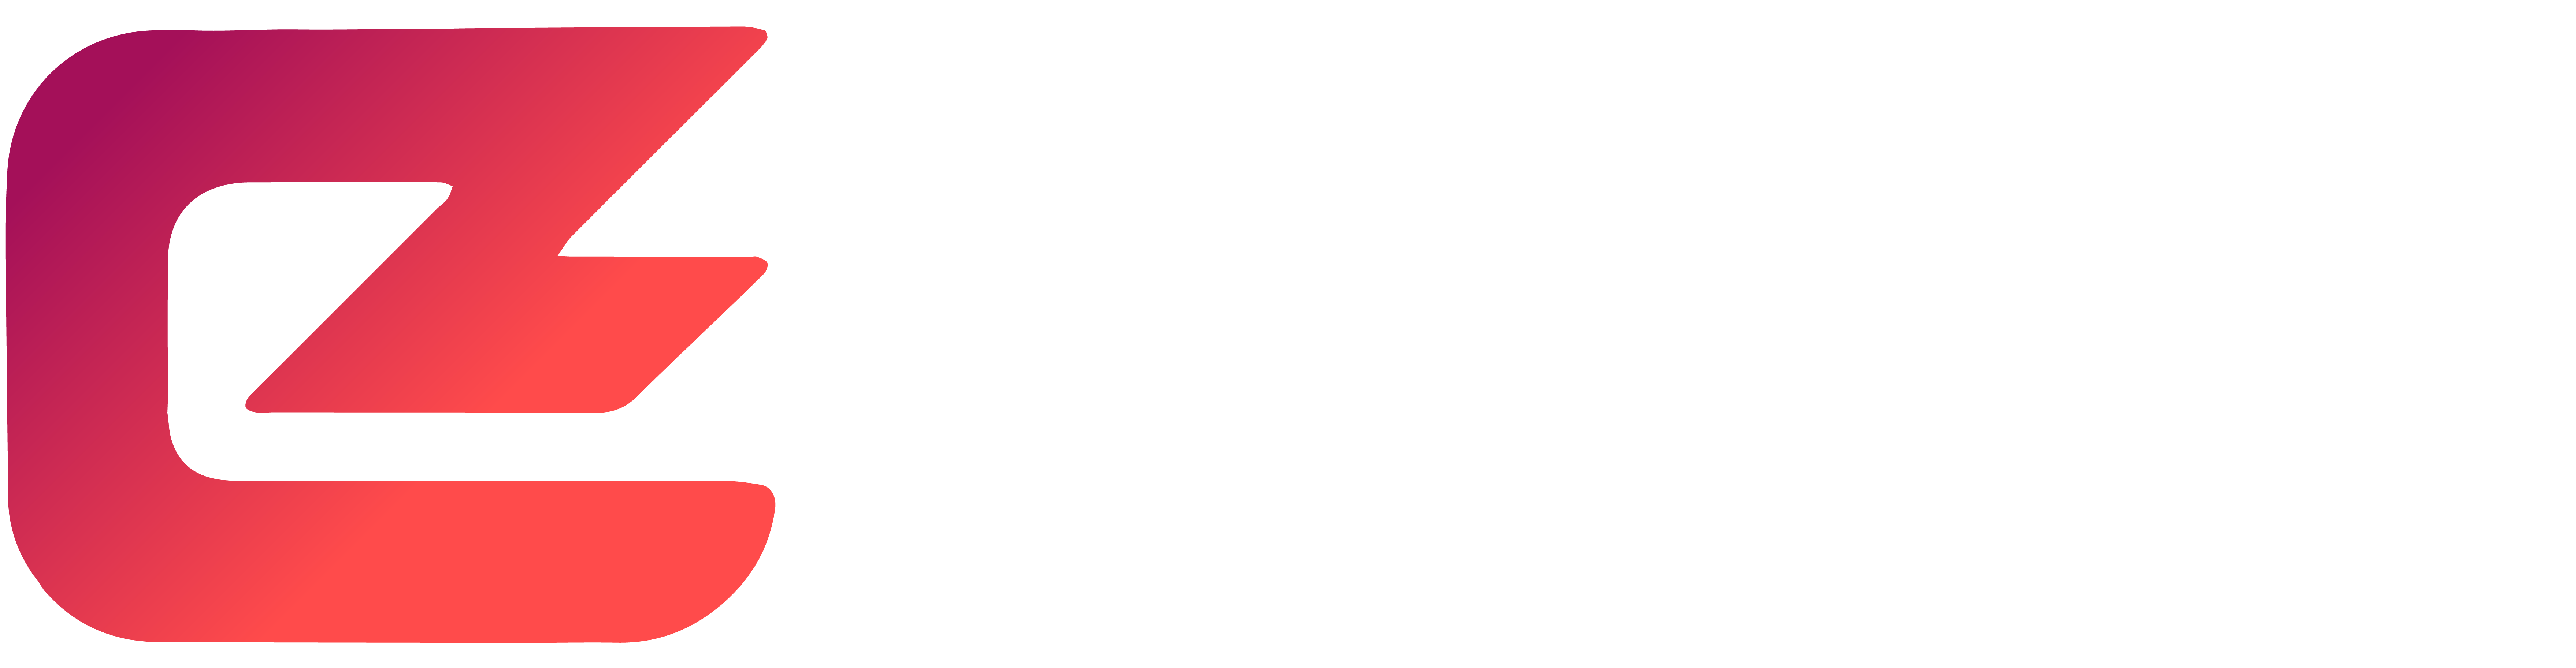 EZ百科